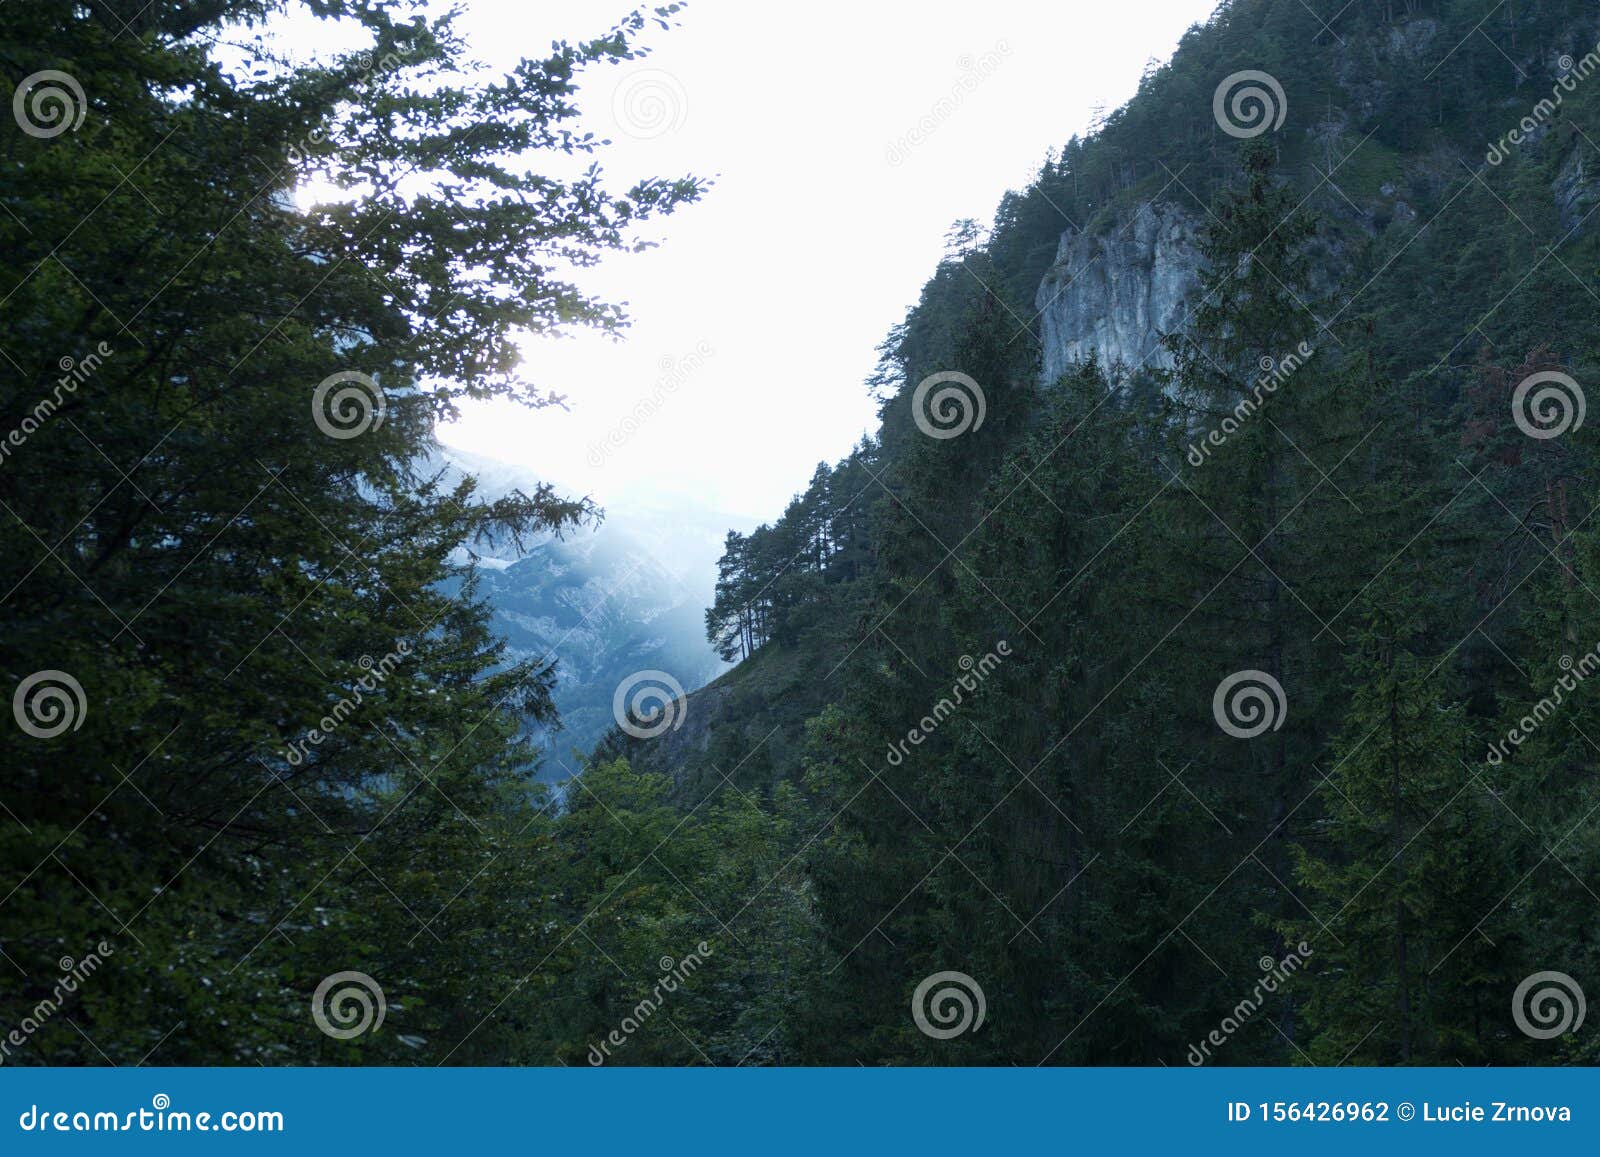 beautiful mountain landscape of totes gebirge mountains around hinterstoder